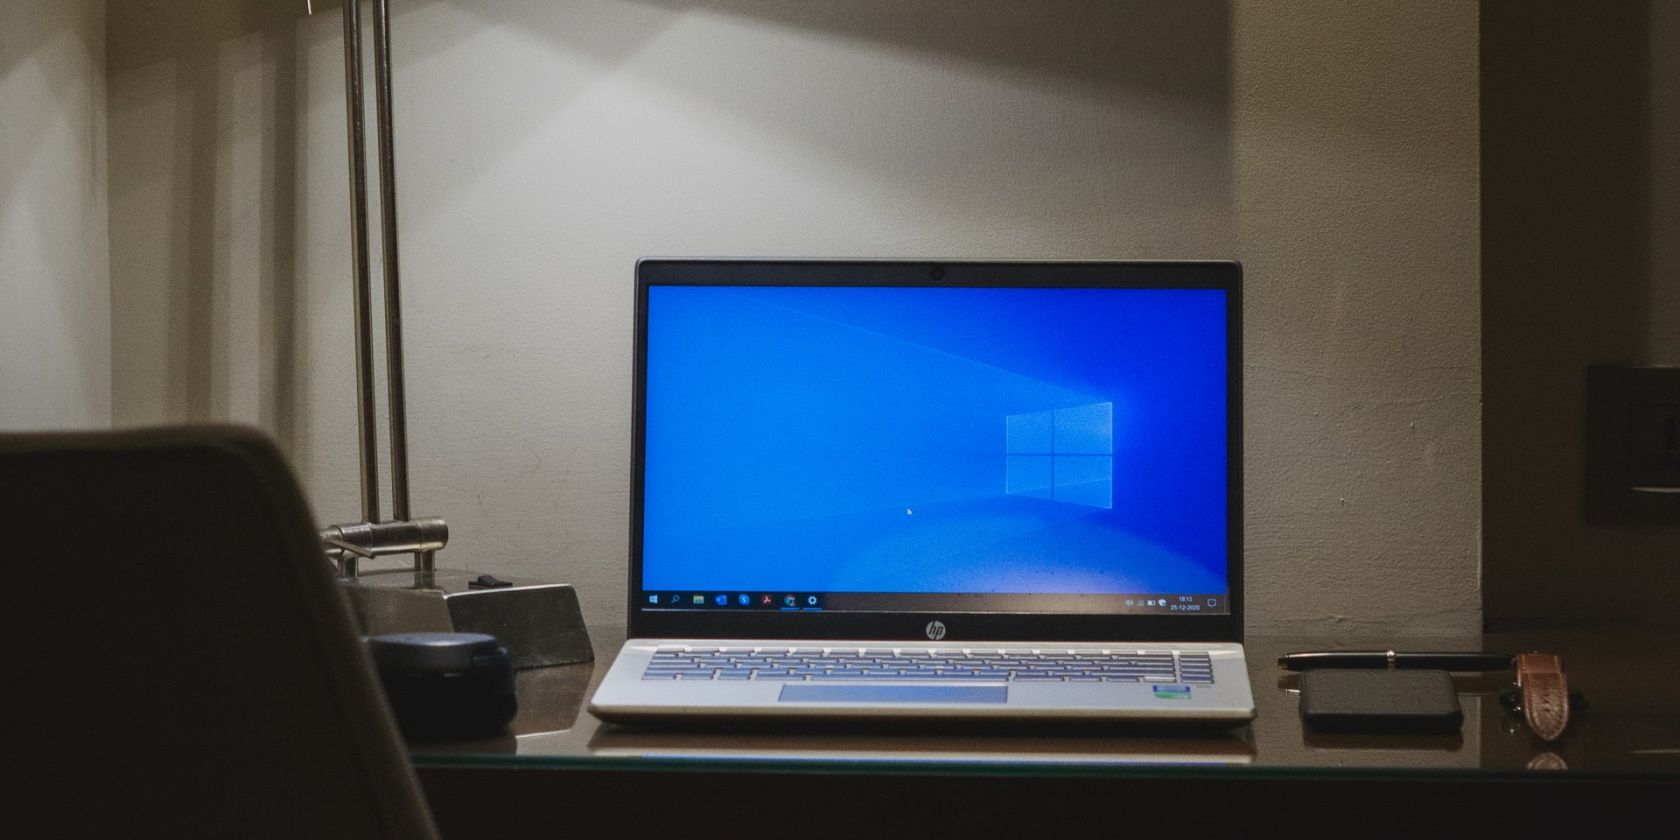 Windows 10 laptop on desk